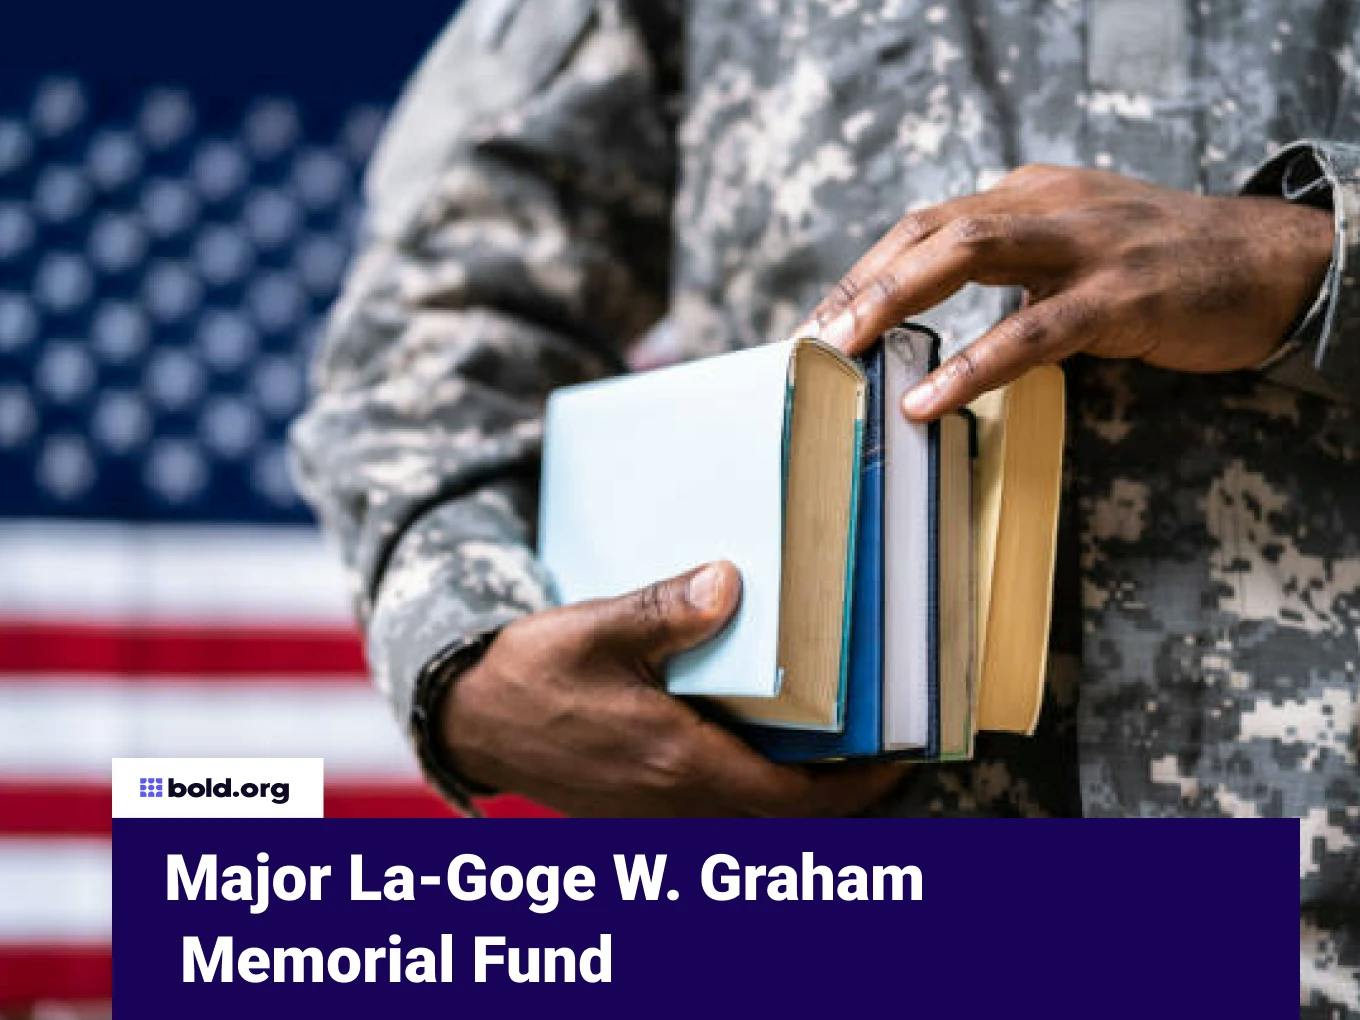 Major La-Goge W. Graham Memorial Fund